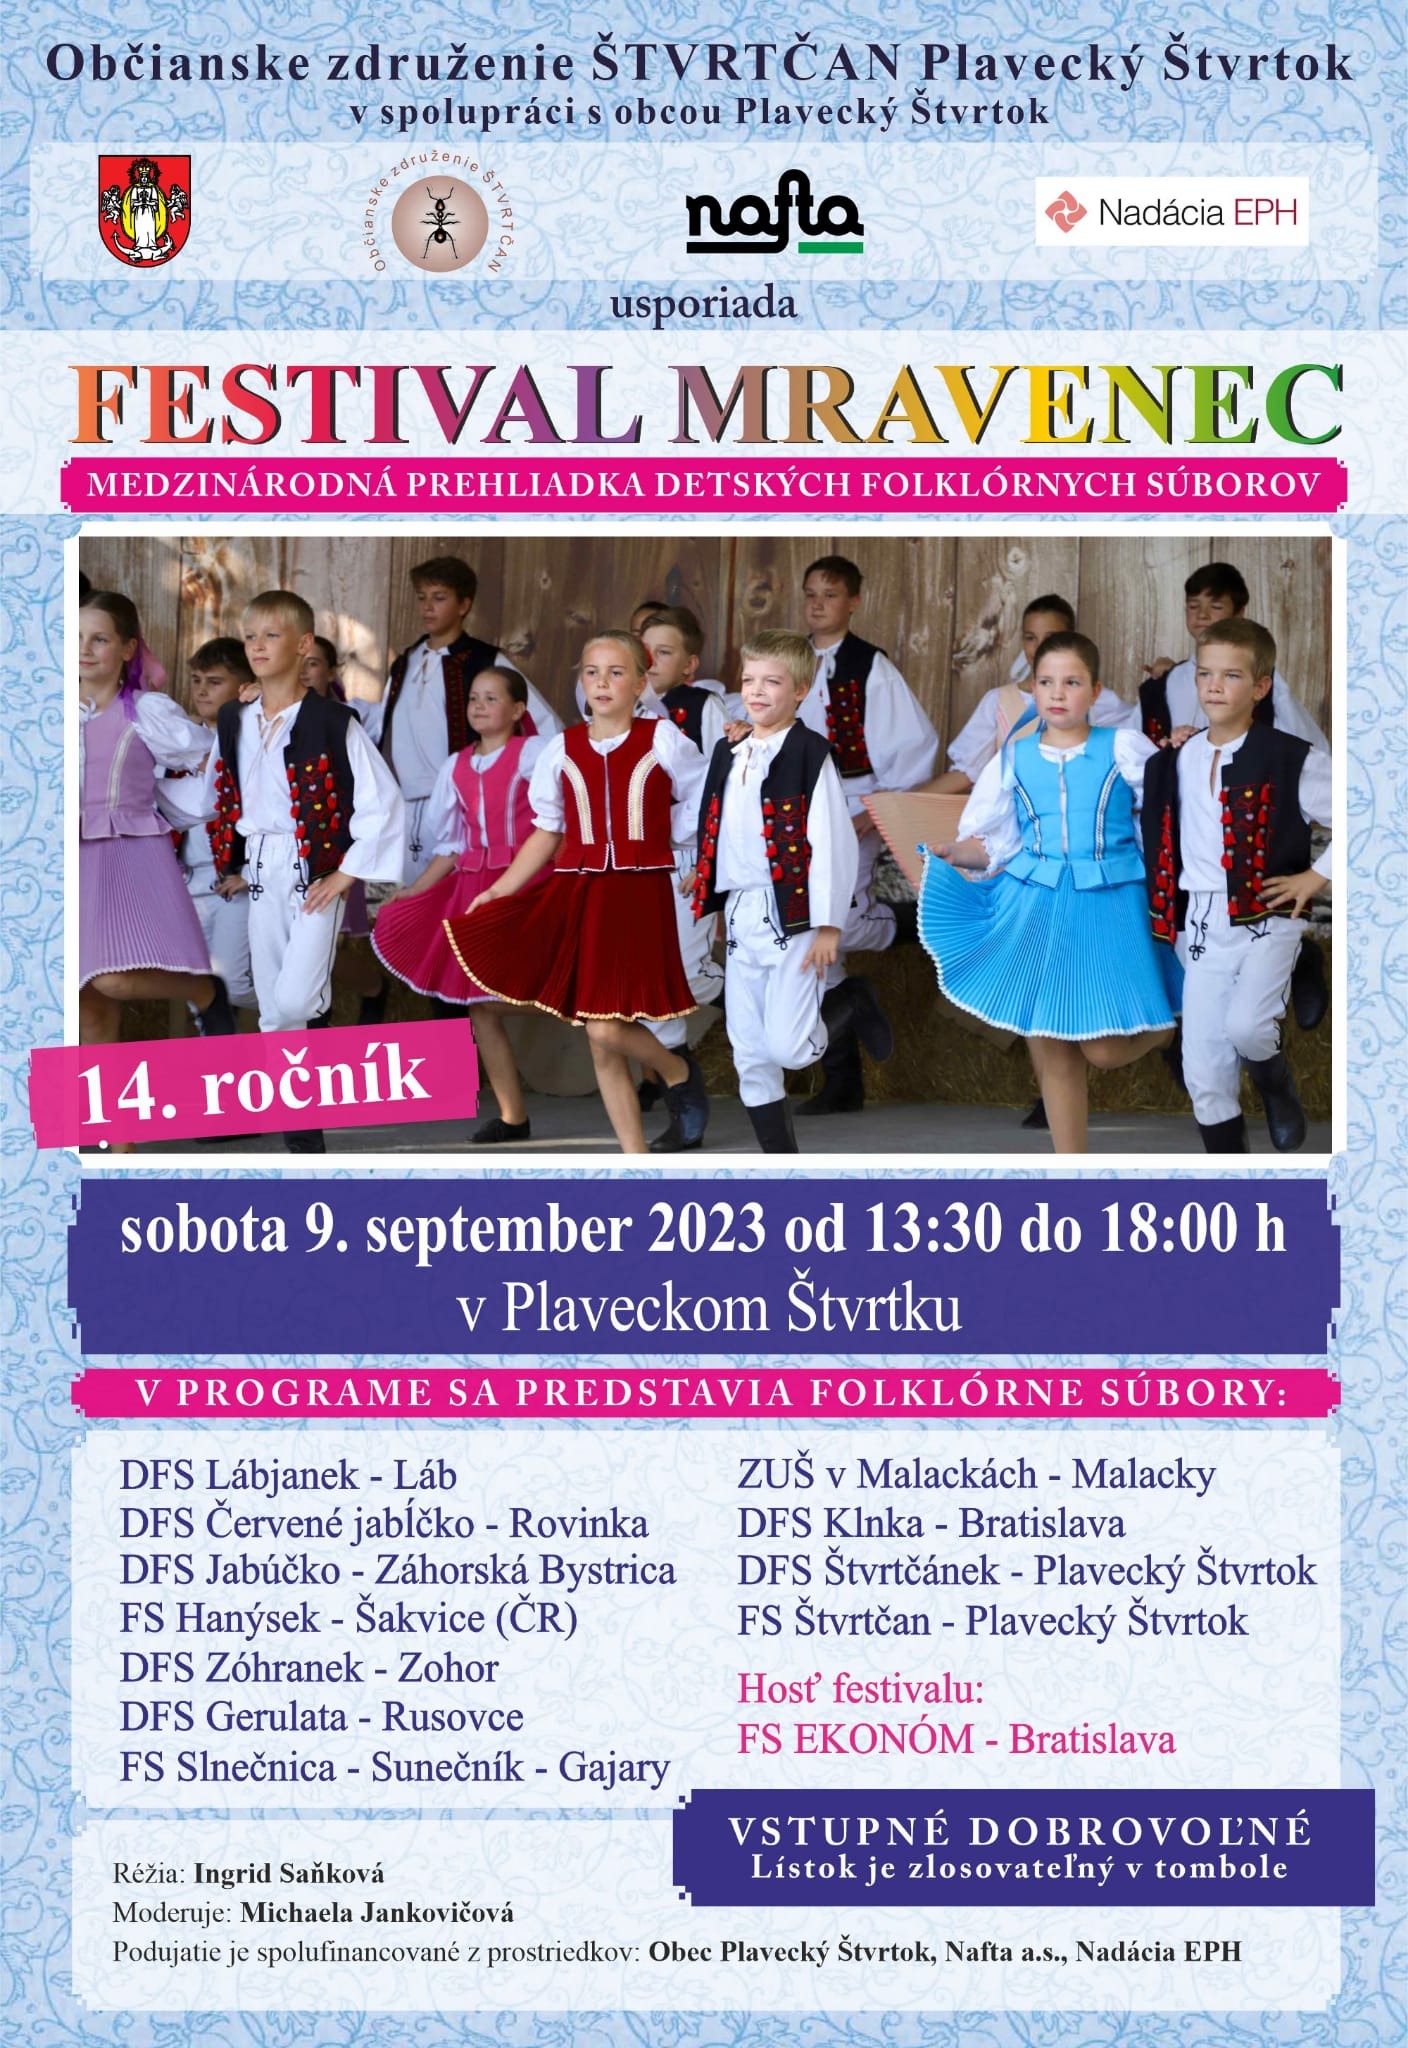 Detsk folklrny festival Mravenec 2023 Plaveck tvrtok - 14. ronk